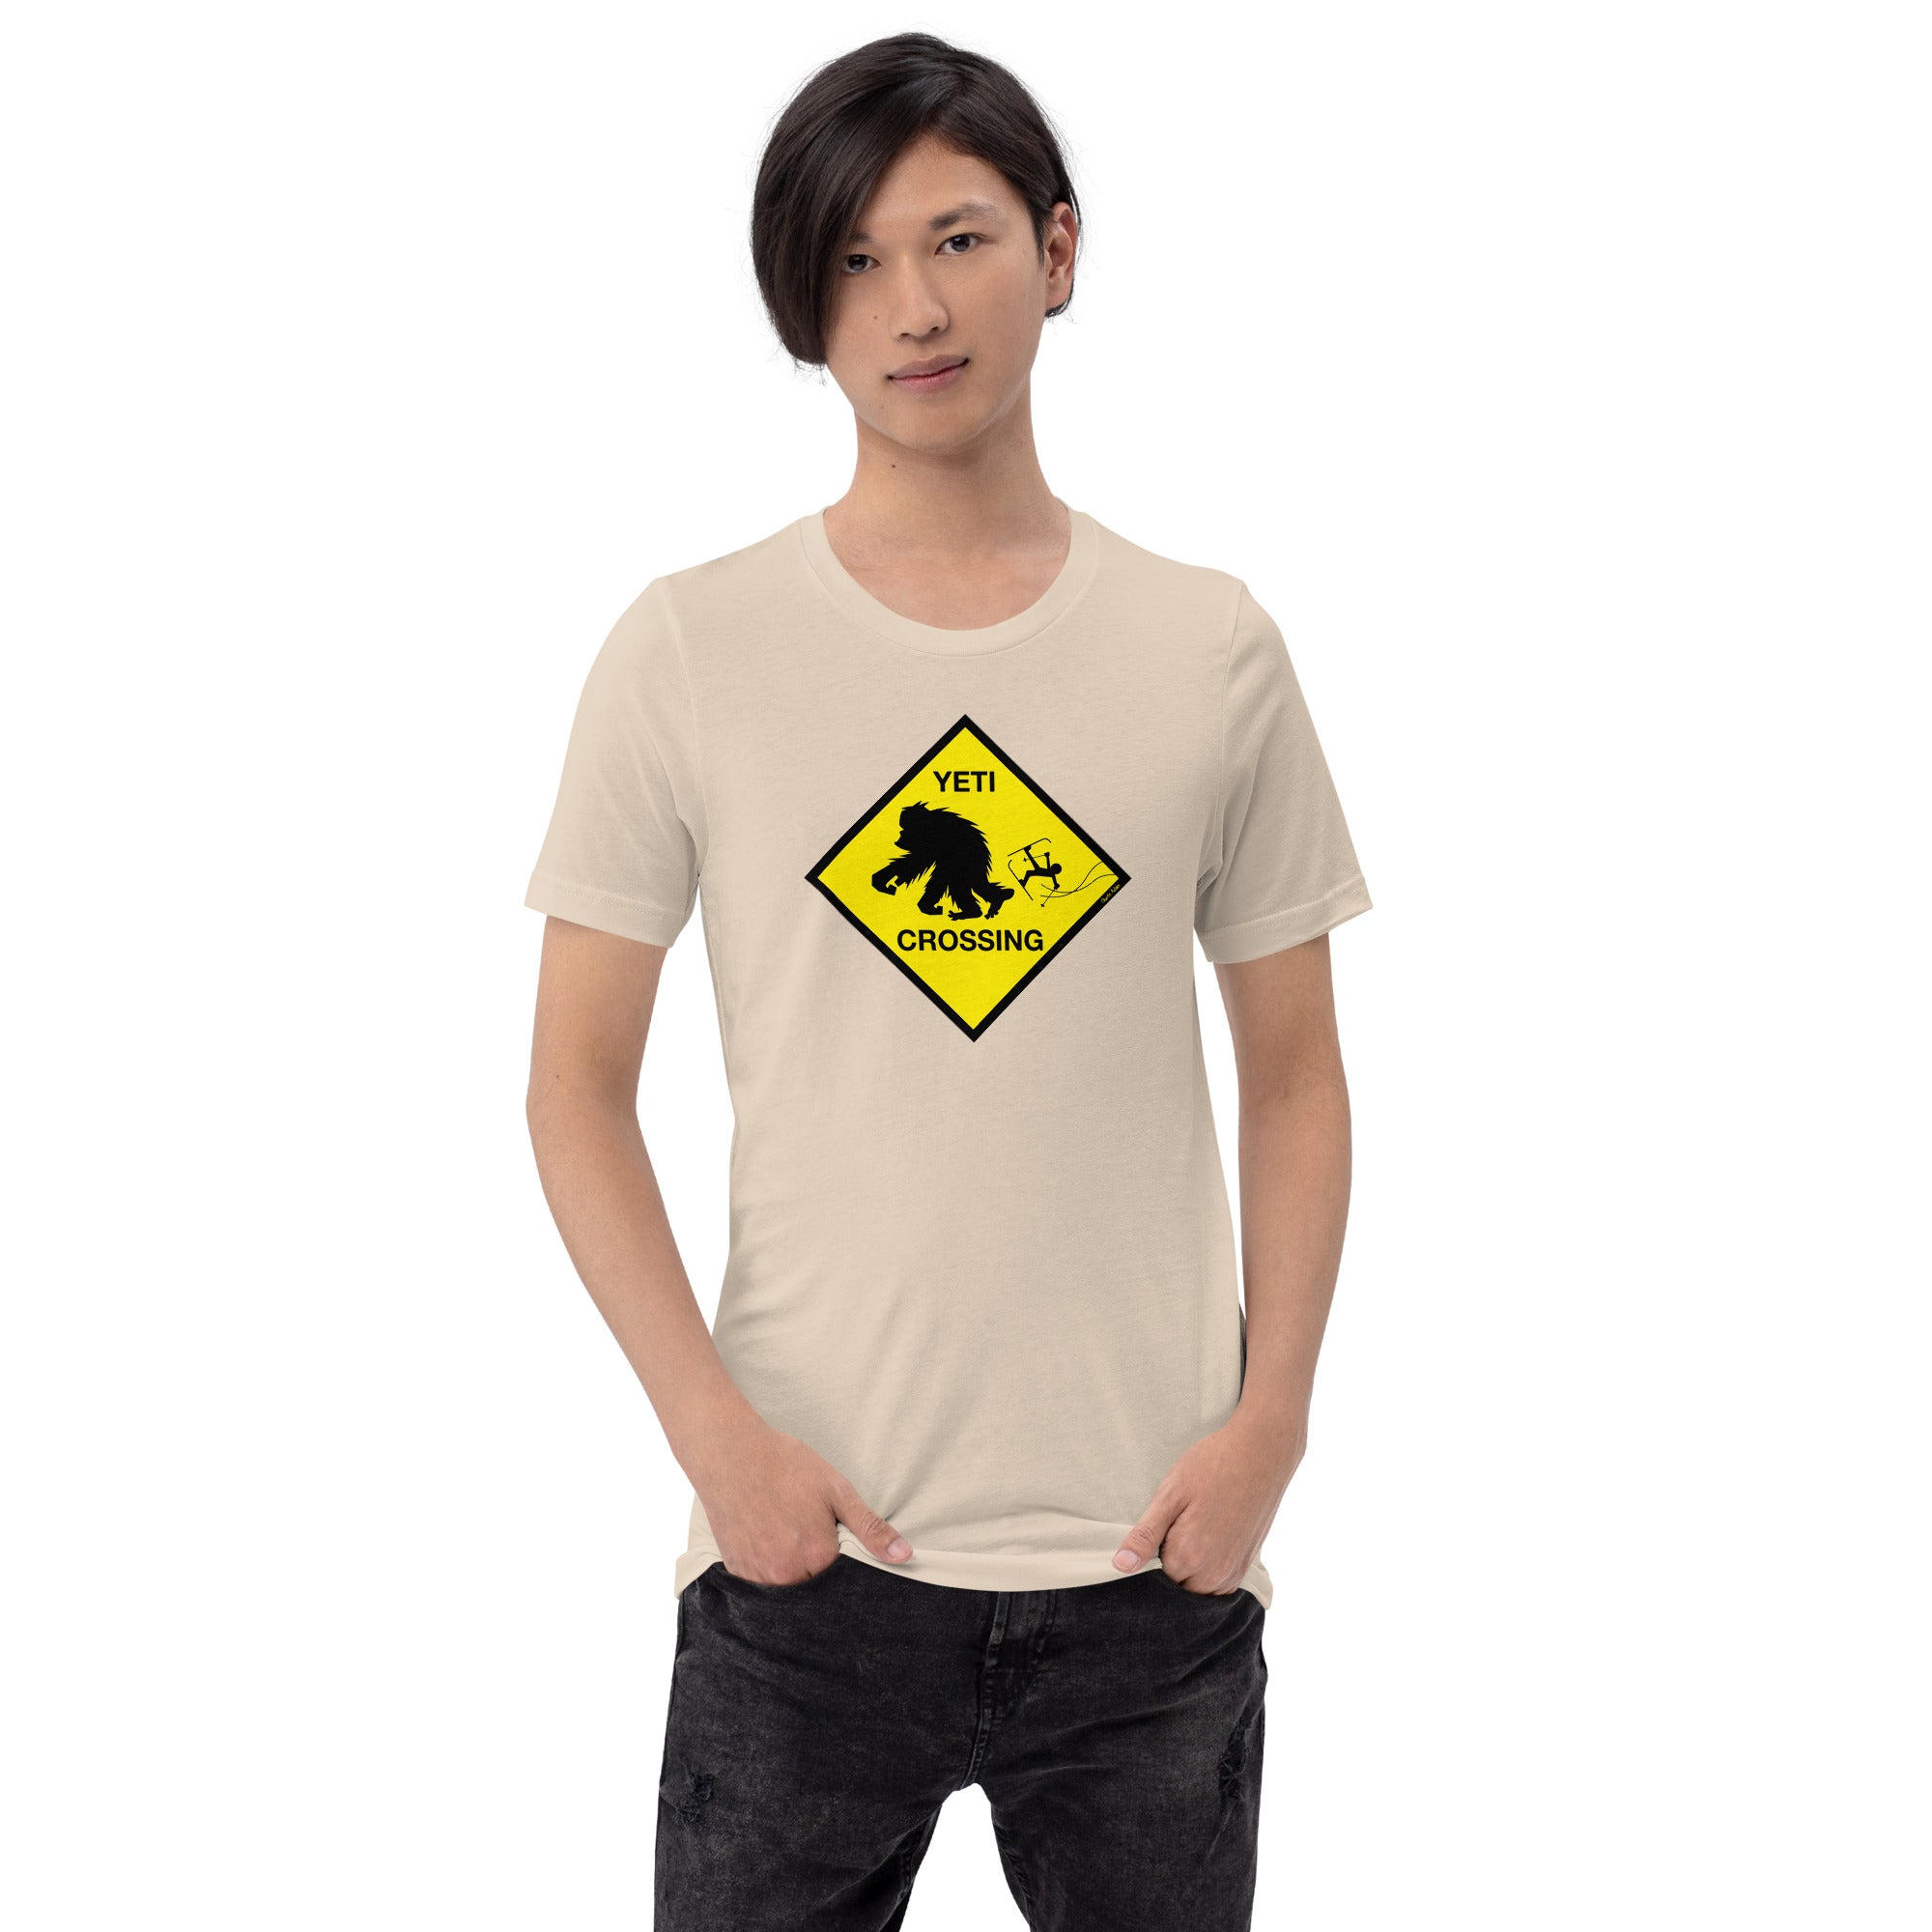 Unisex cotton t-shirt Yeti Crossing